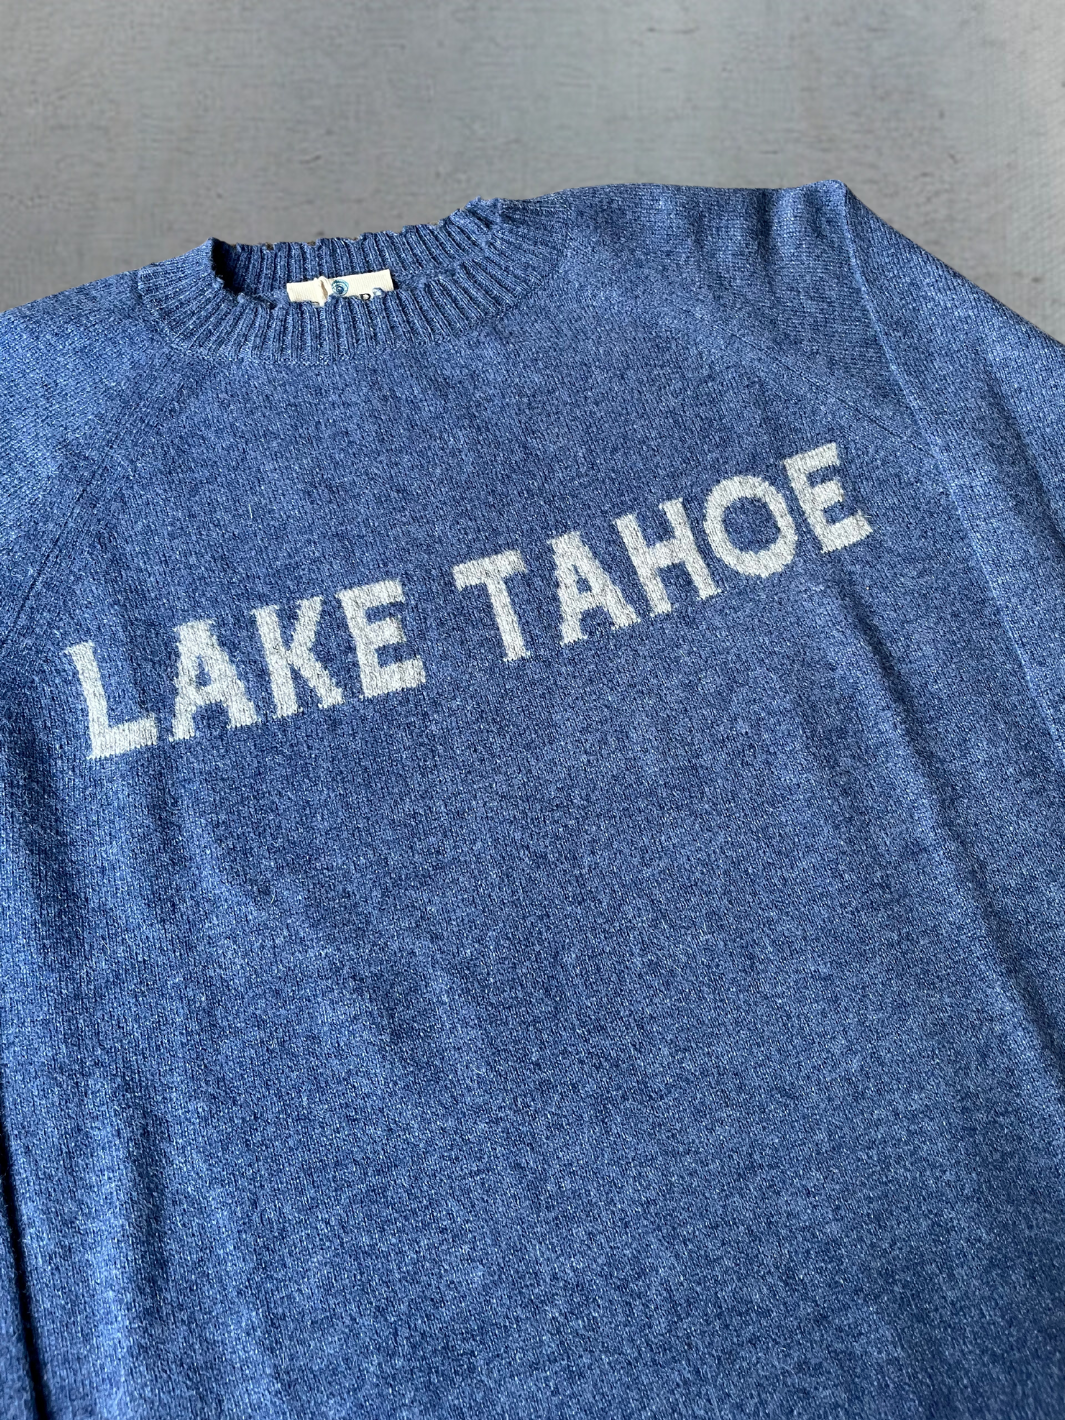 LAKE TAHOE CASHMERE CREW - Romi Boutique